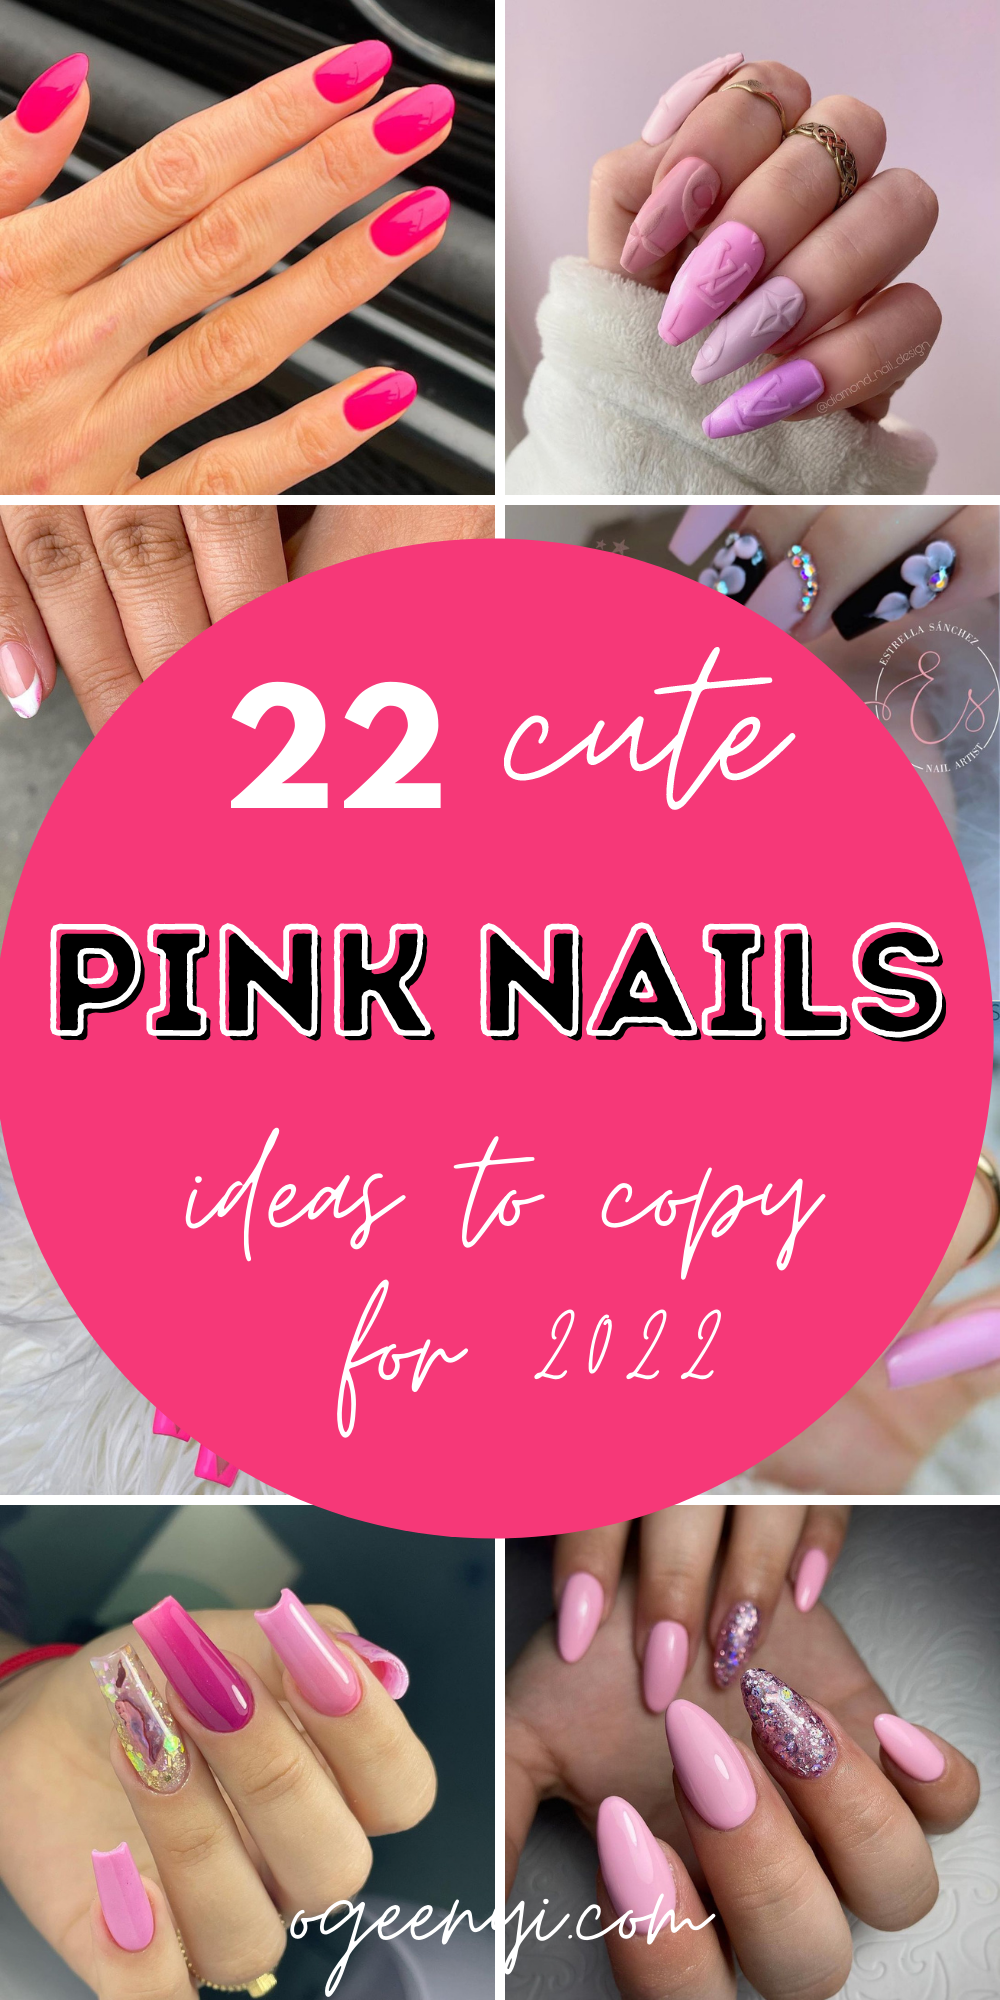 22 Pretty Pink Nails Design You Will Love